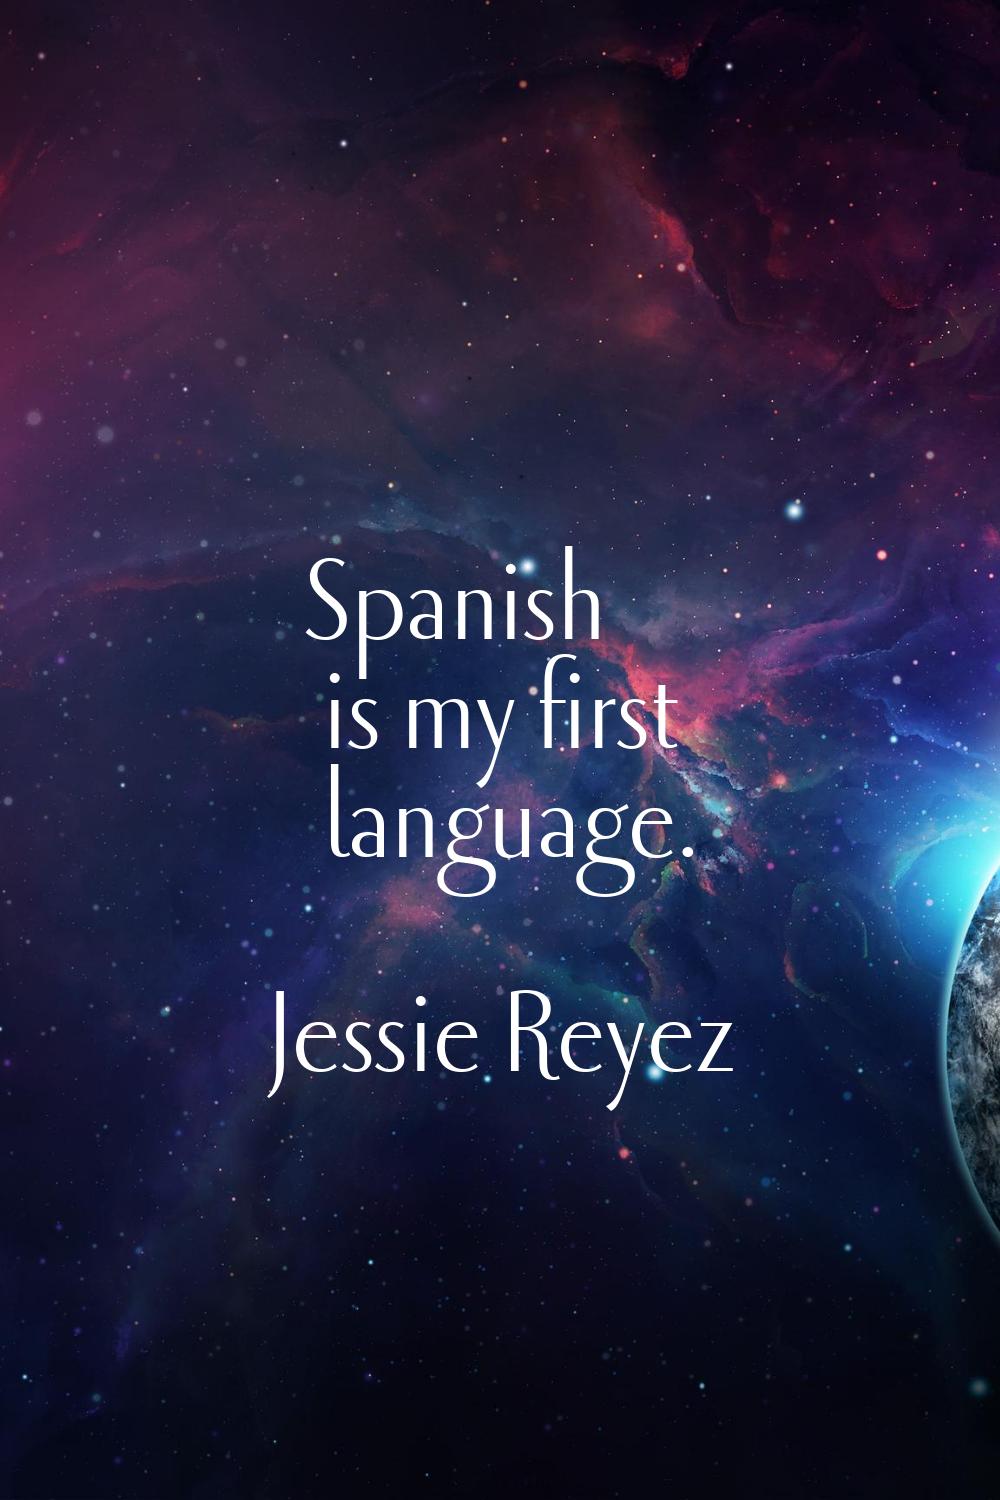 Spanish is my first language.